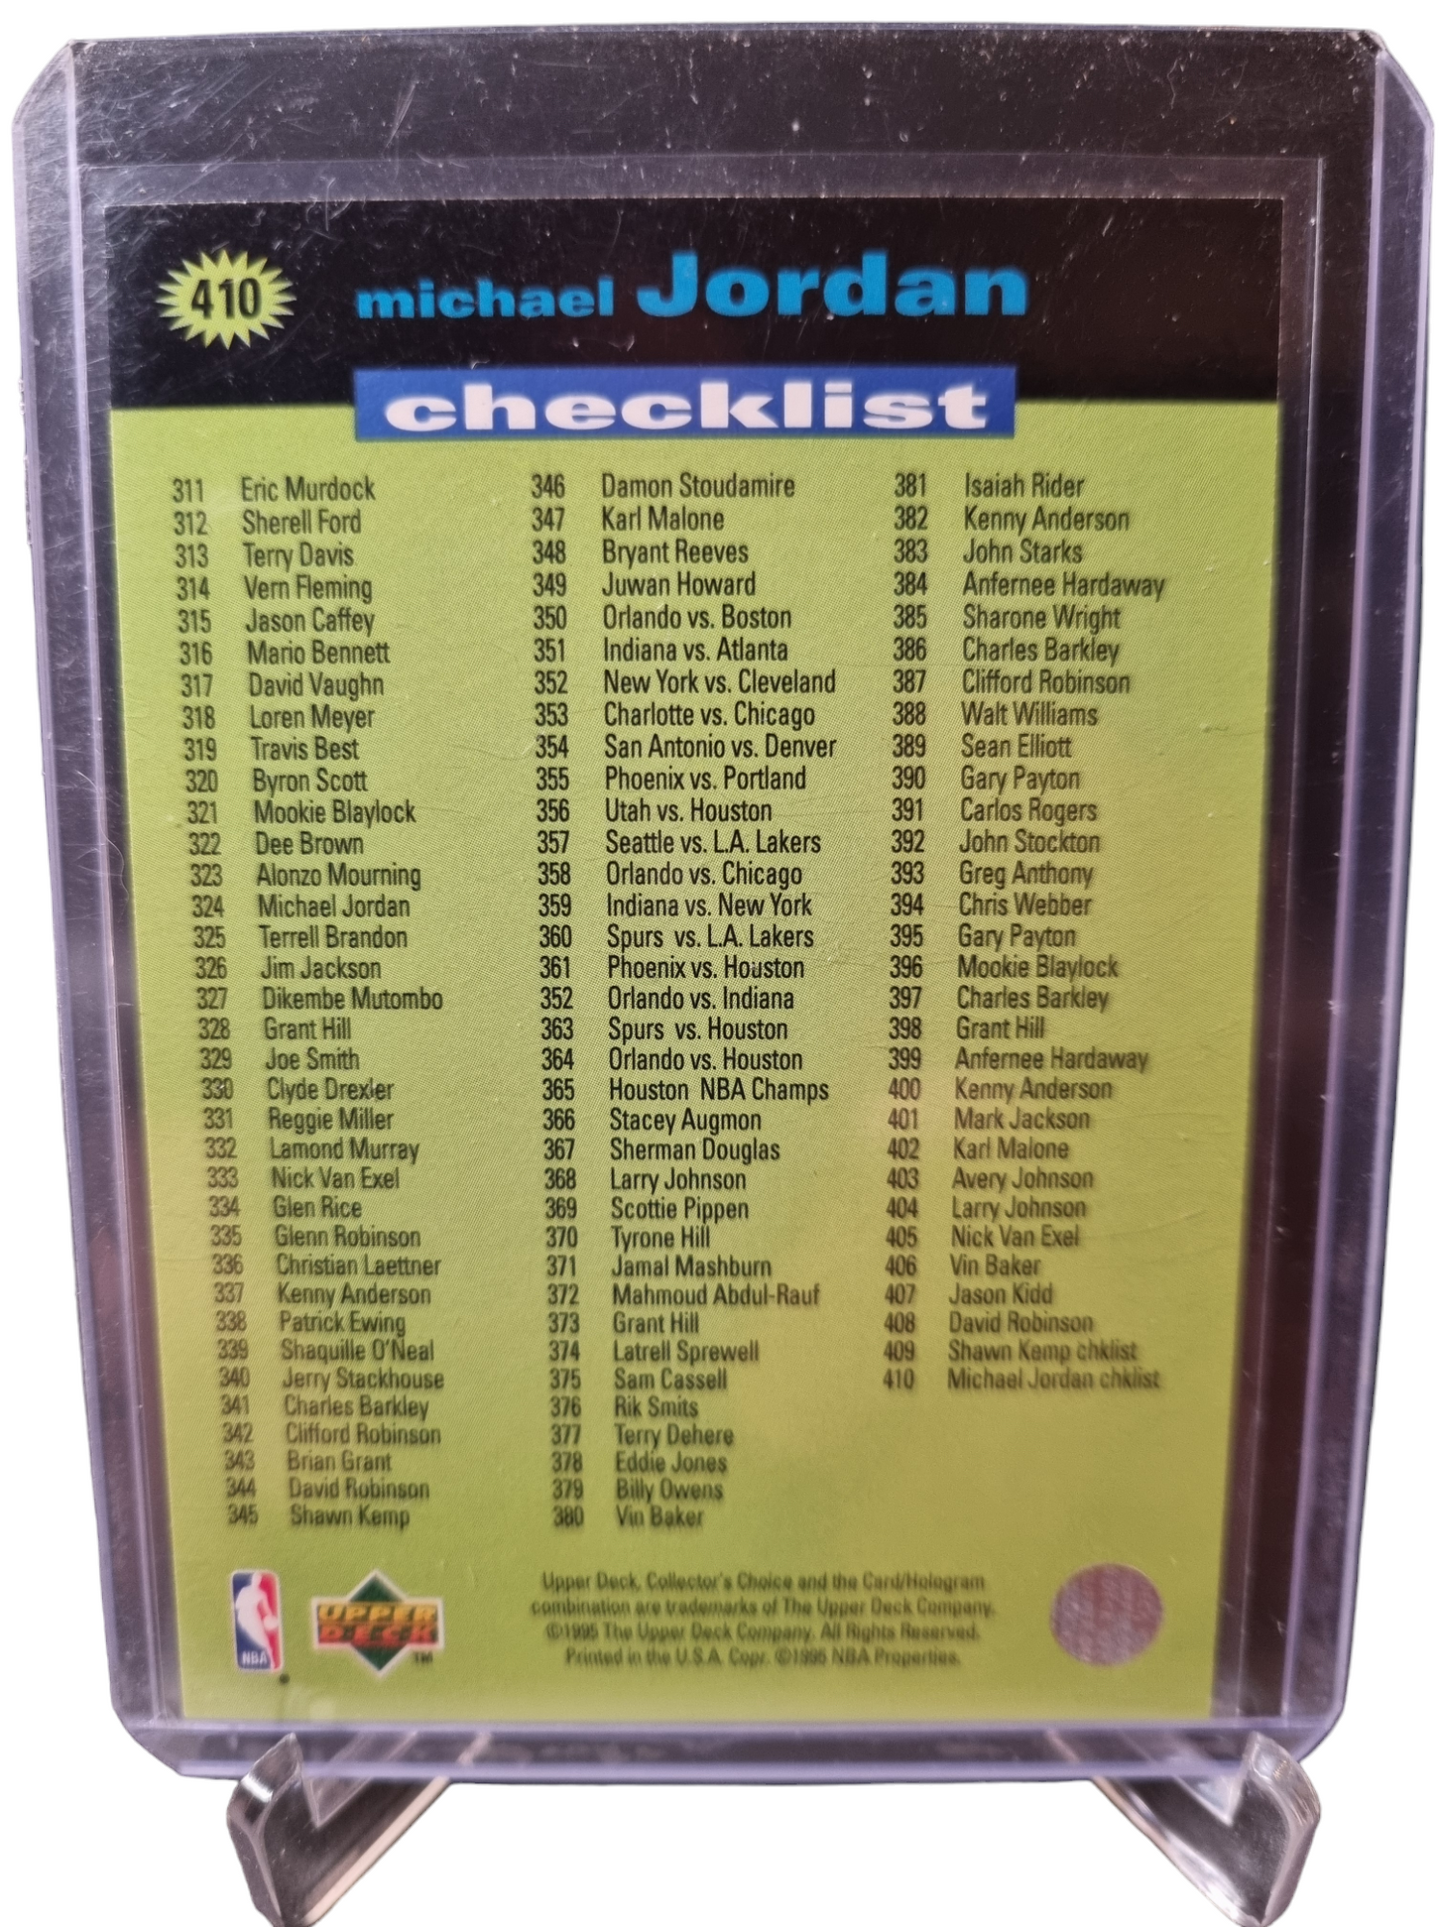 1995 Upper Deck #410 Michael Jordan Checklist 311-410